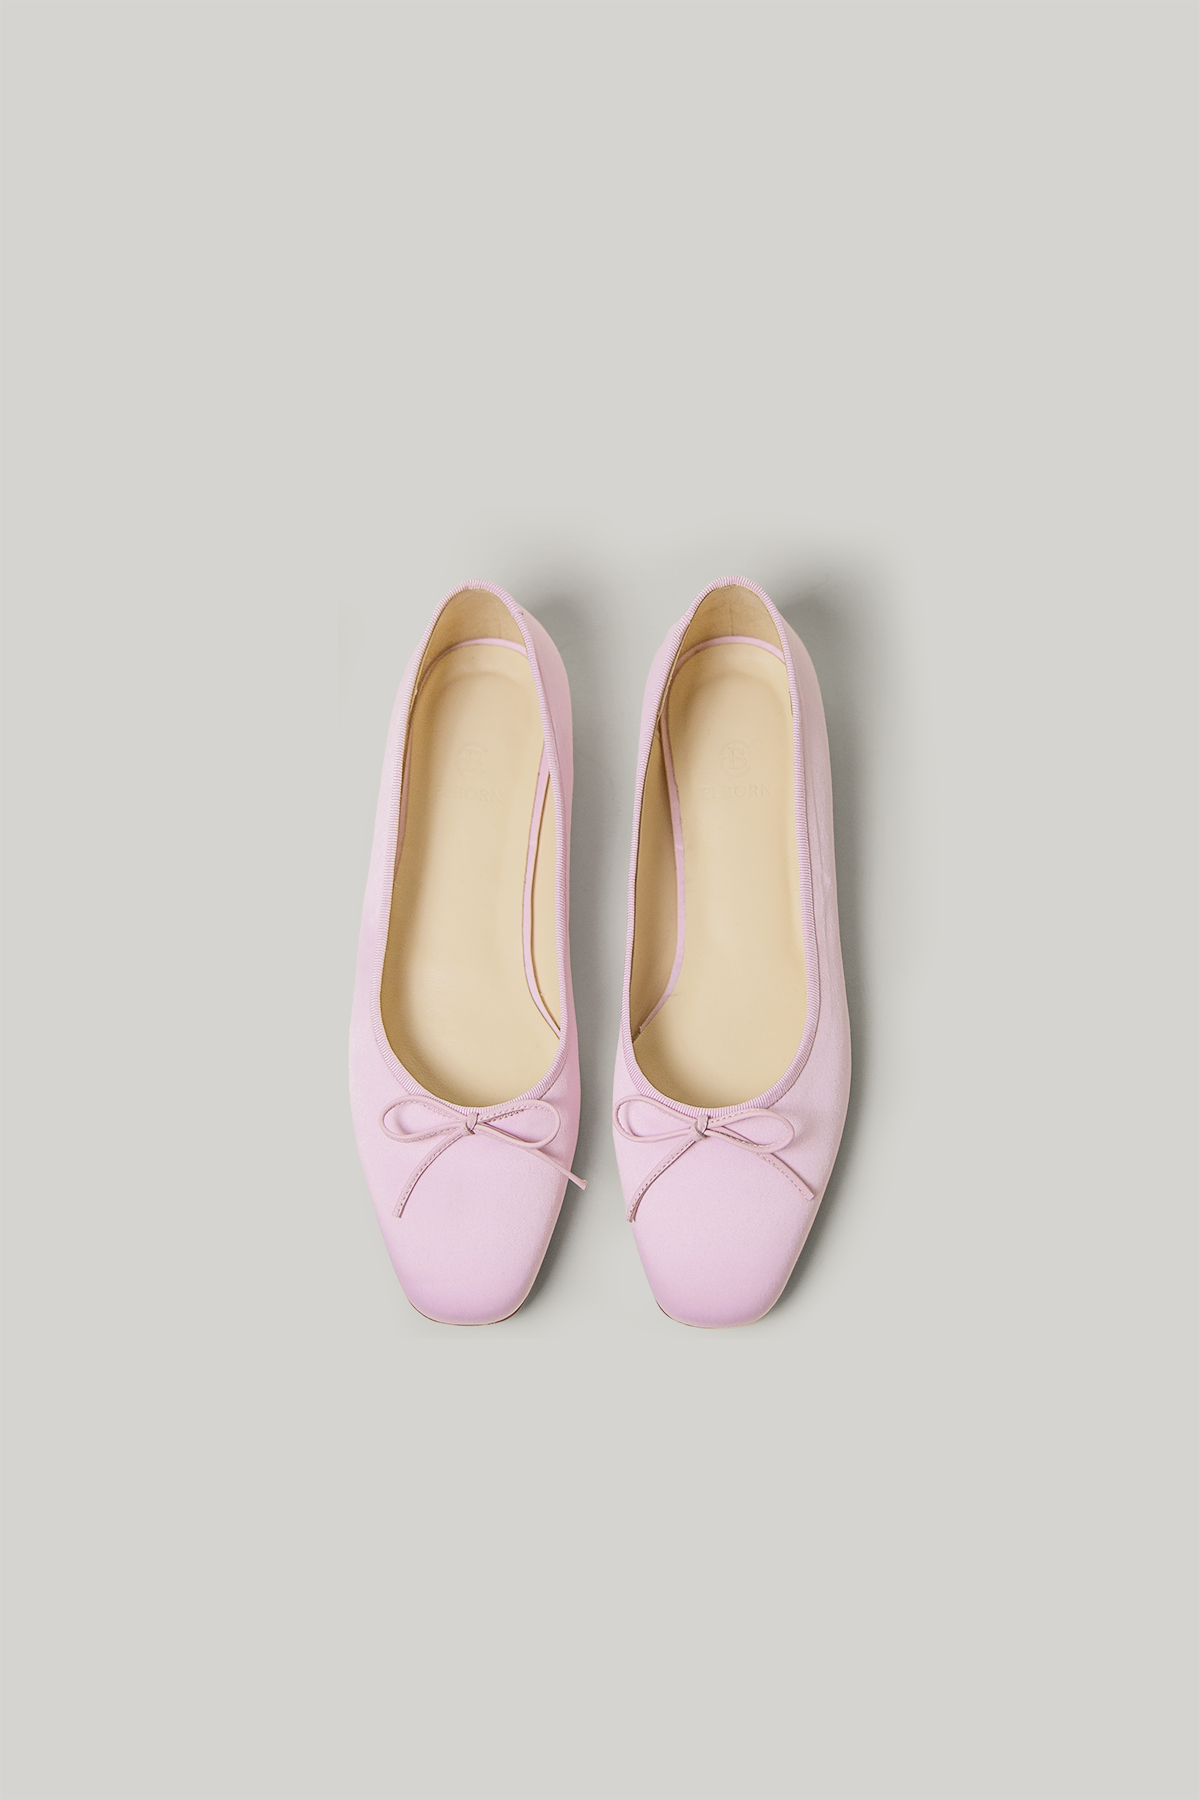 Fiore Satin Ballerinna Shoes (Soft Pink)